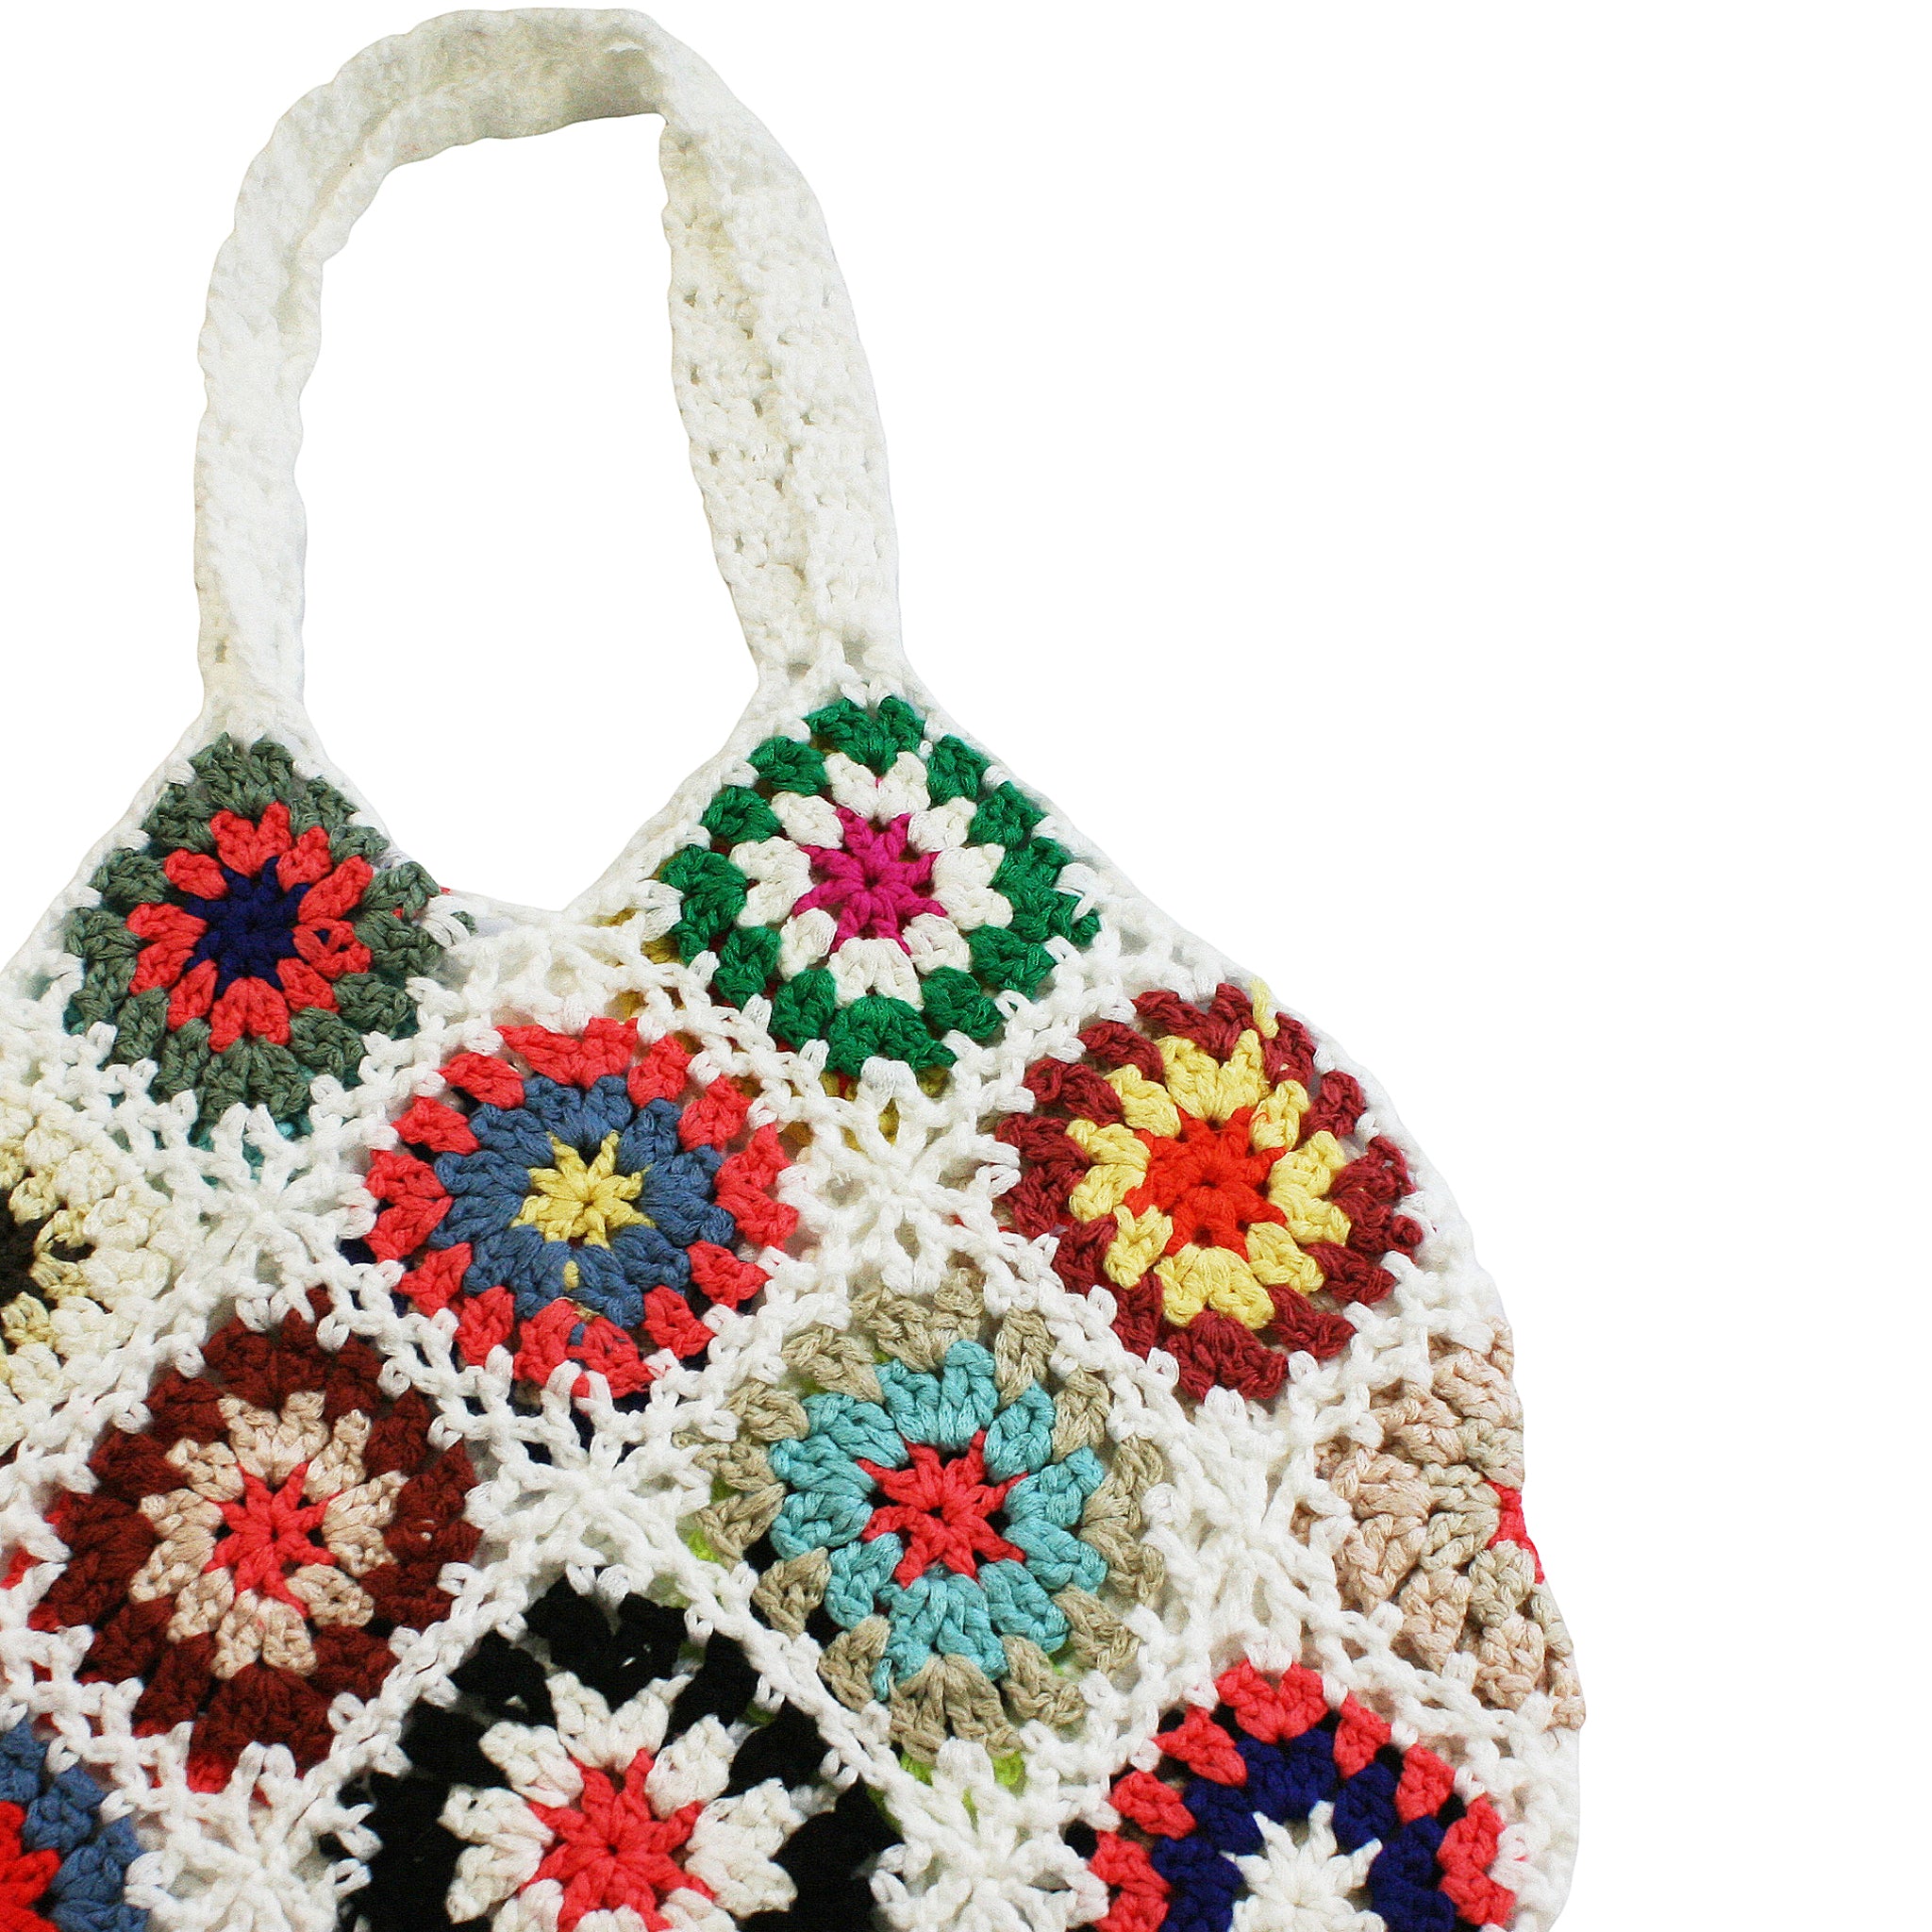 Patchwork Crochet Shoulder Bag in Multicolor and White